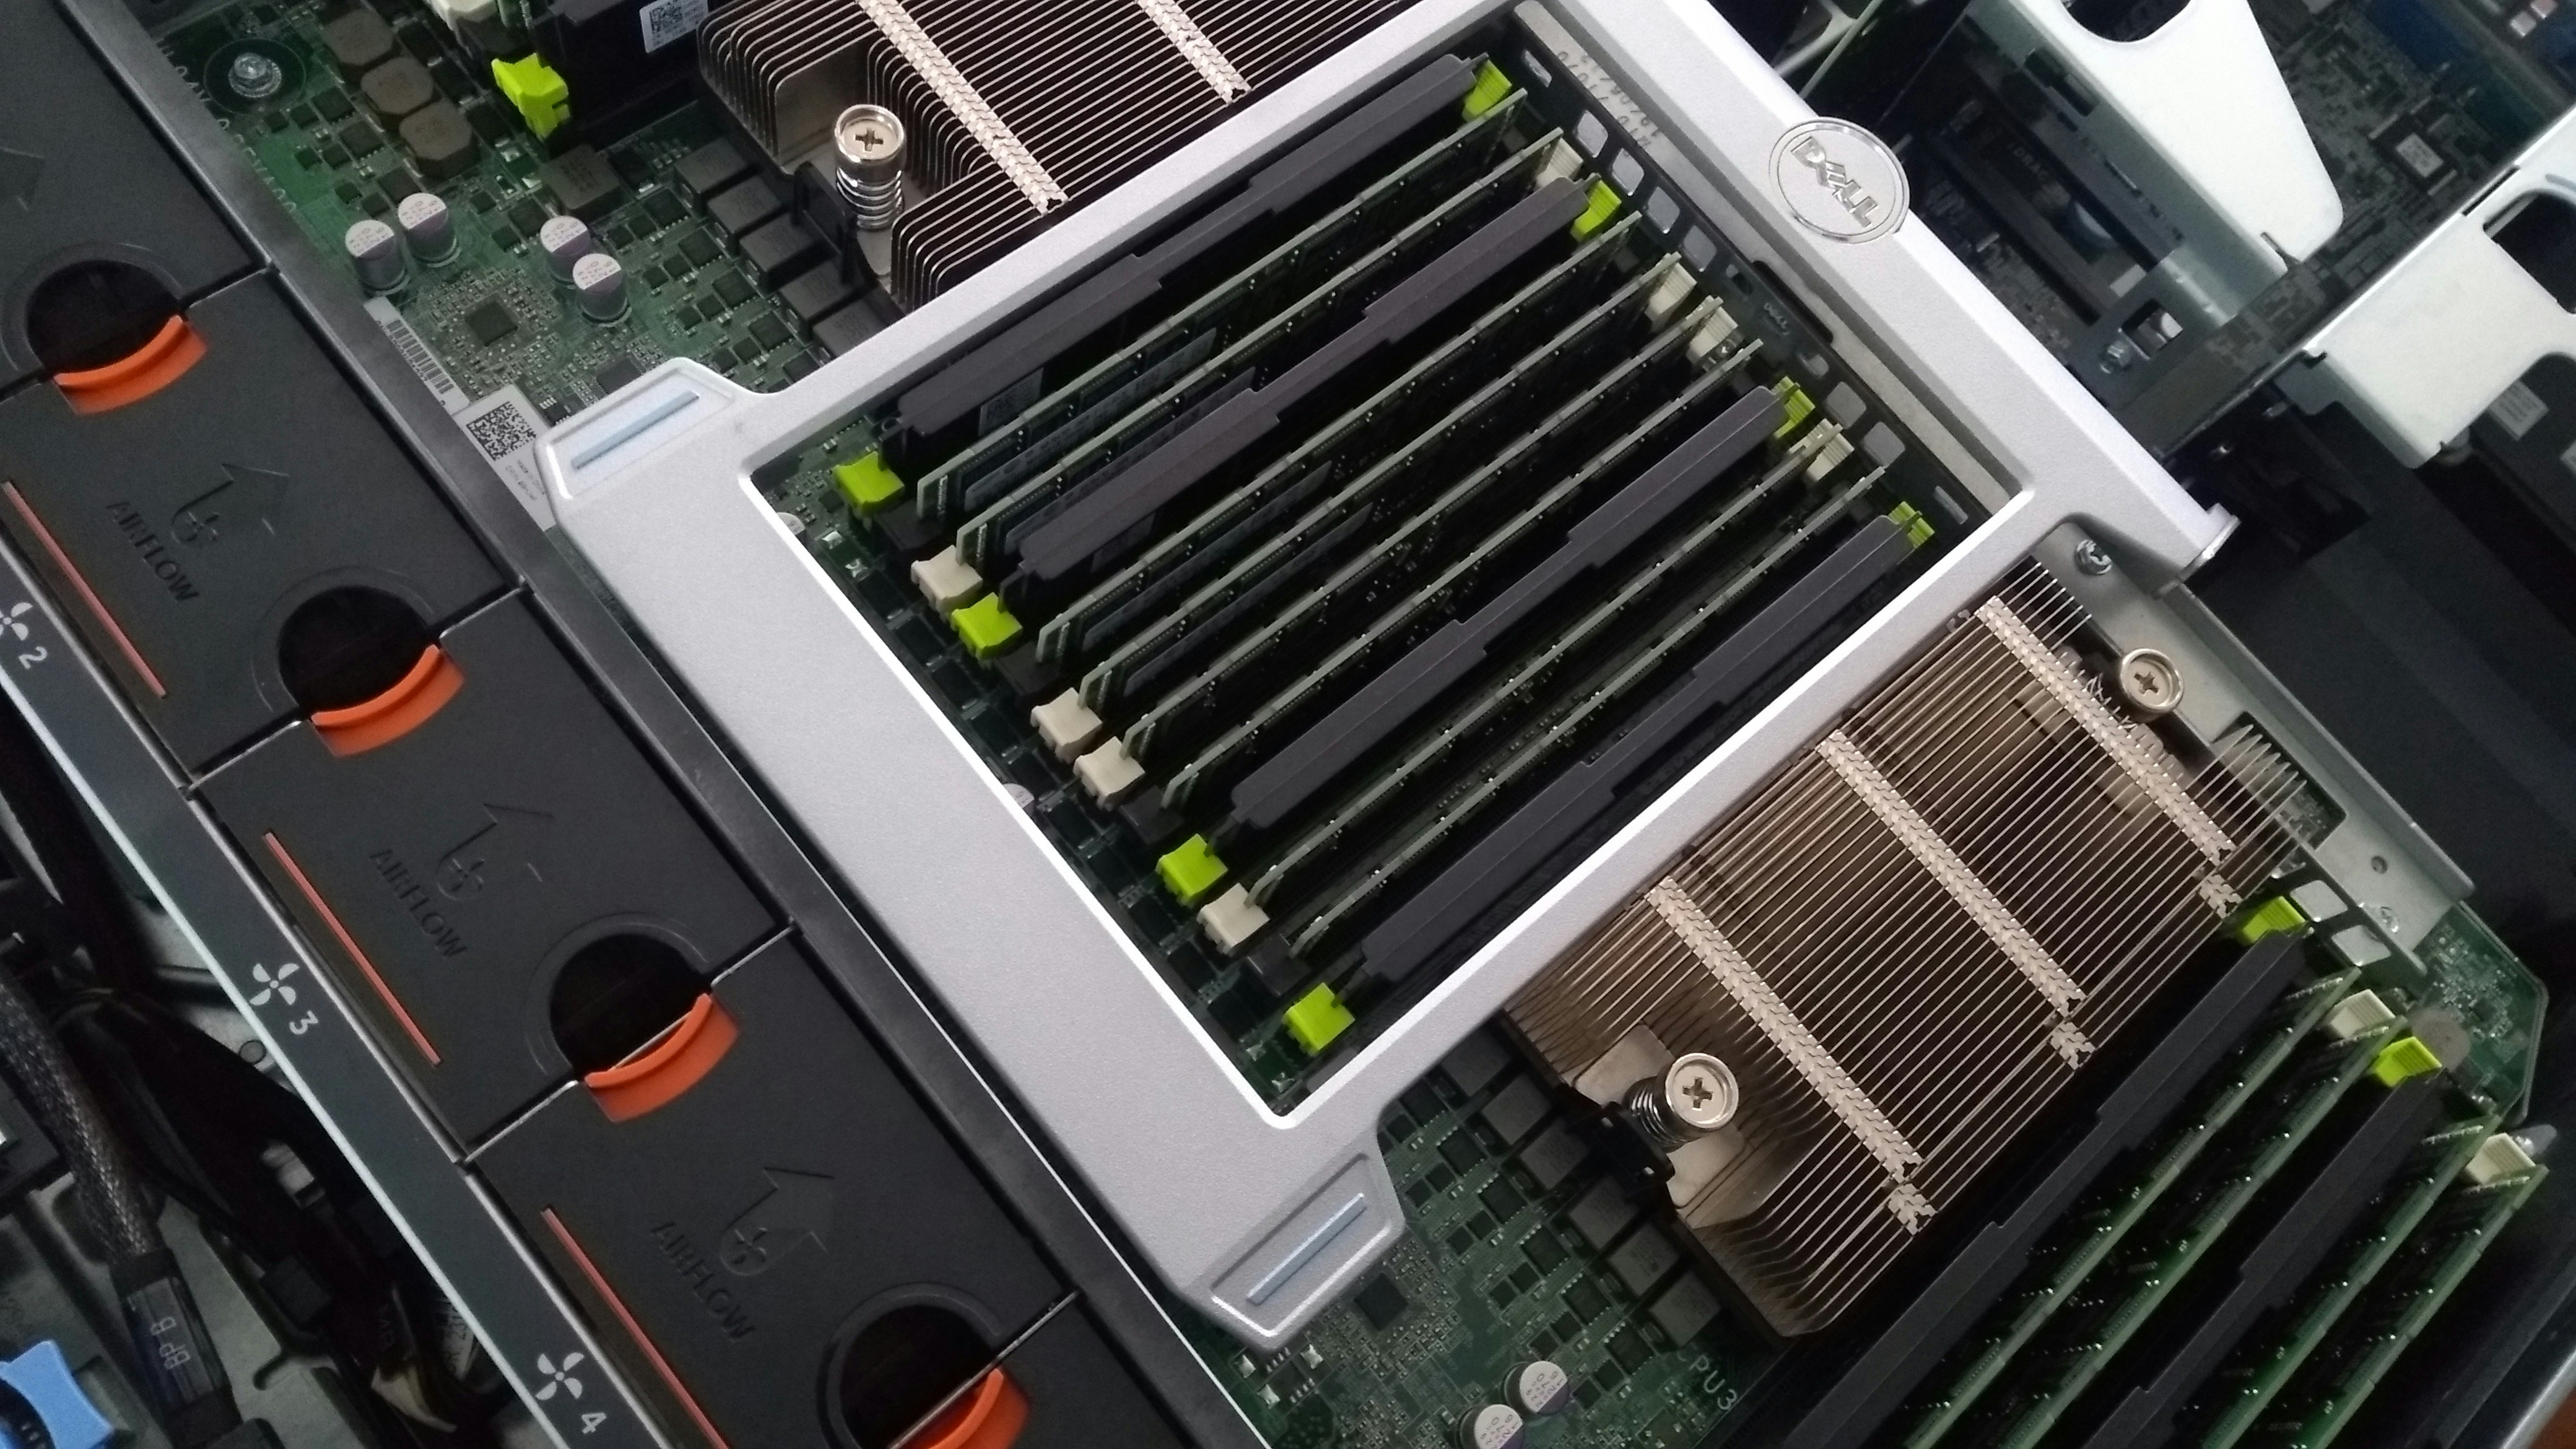 Closeup of server motherboard